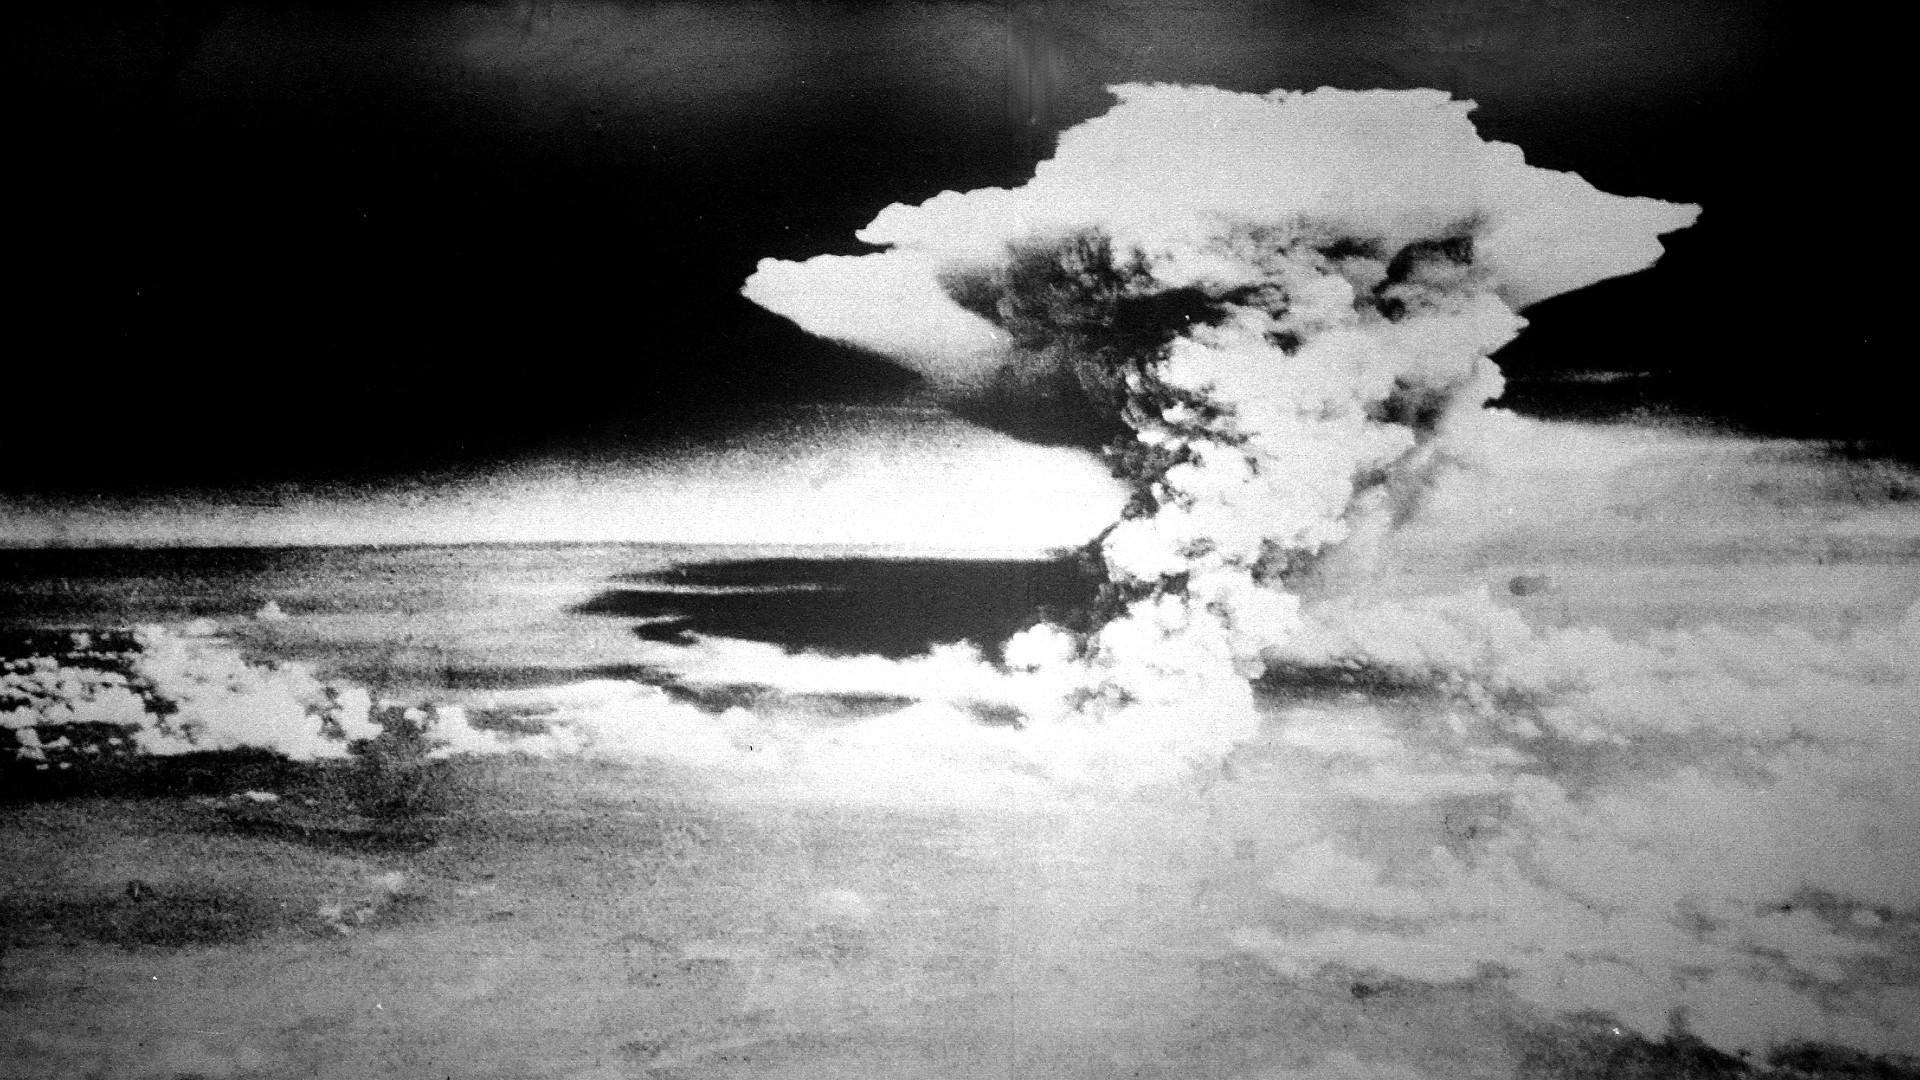 The mushroom cloud over Hiroshima following the detonation of the atomic bomb.